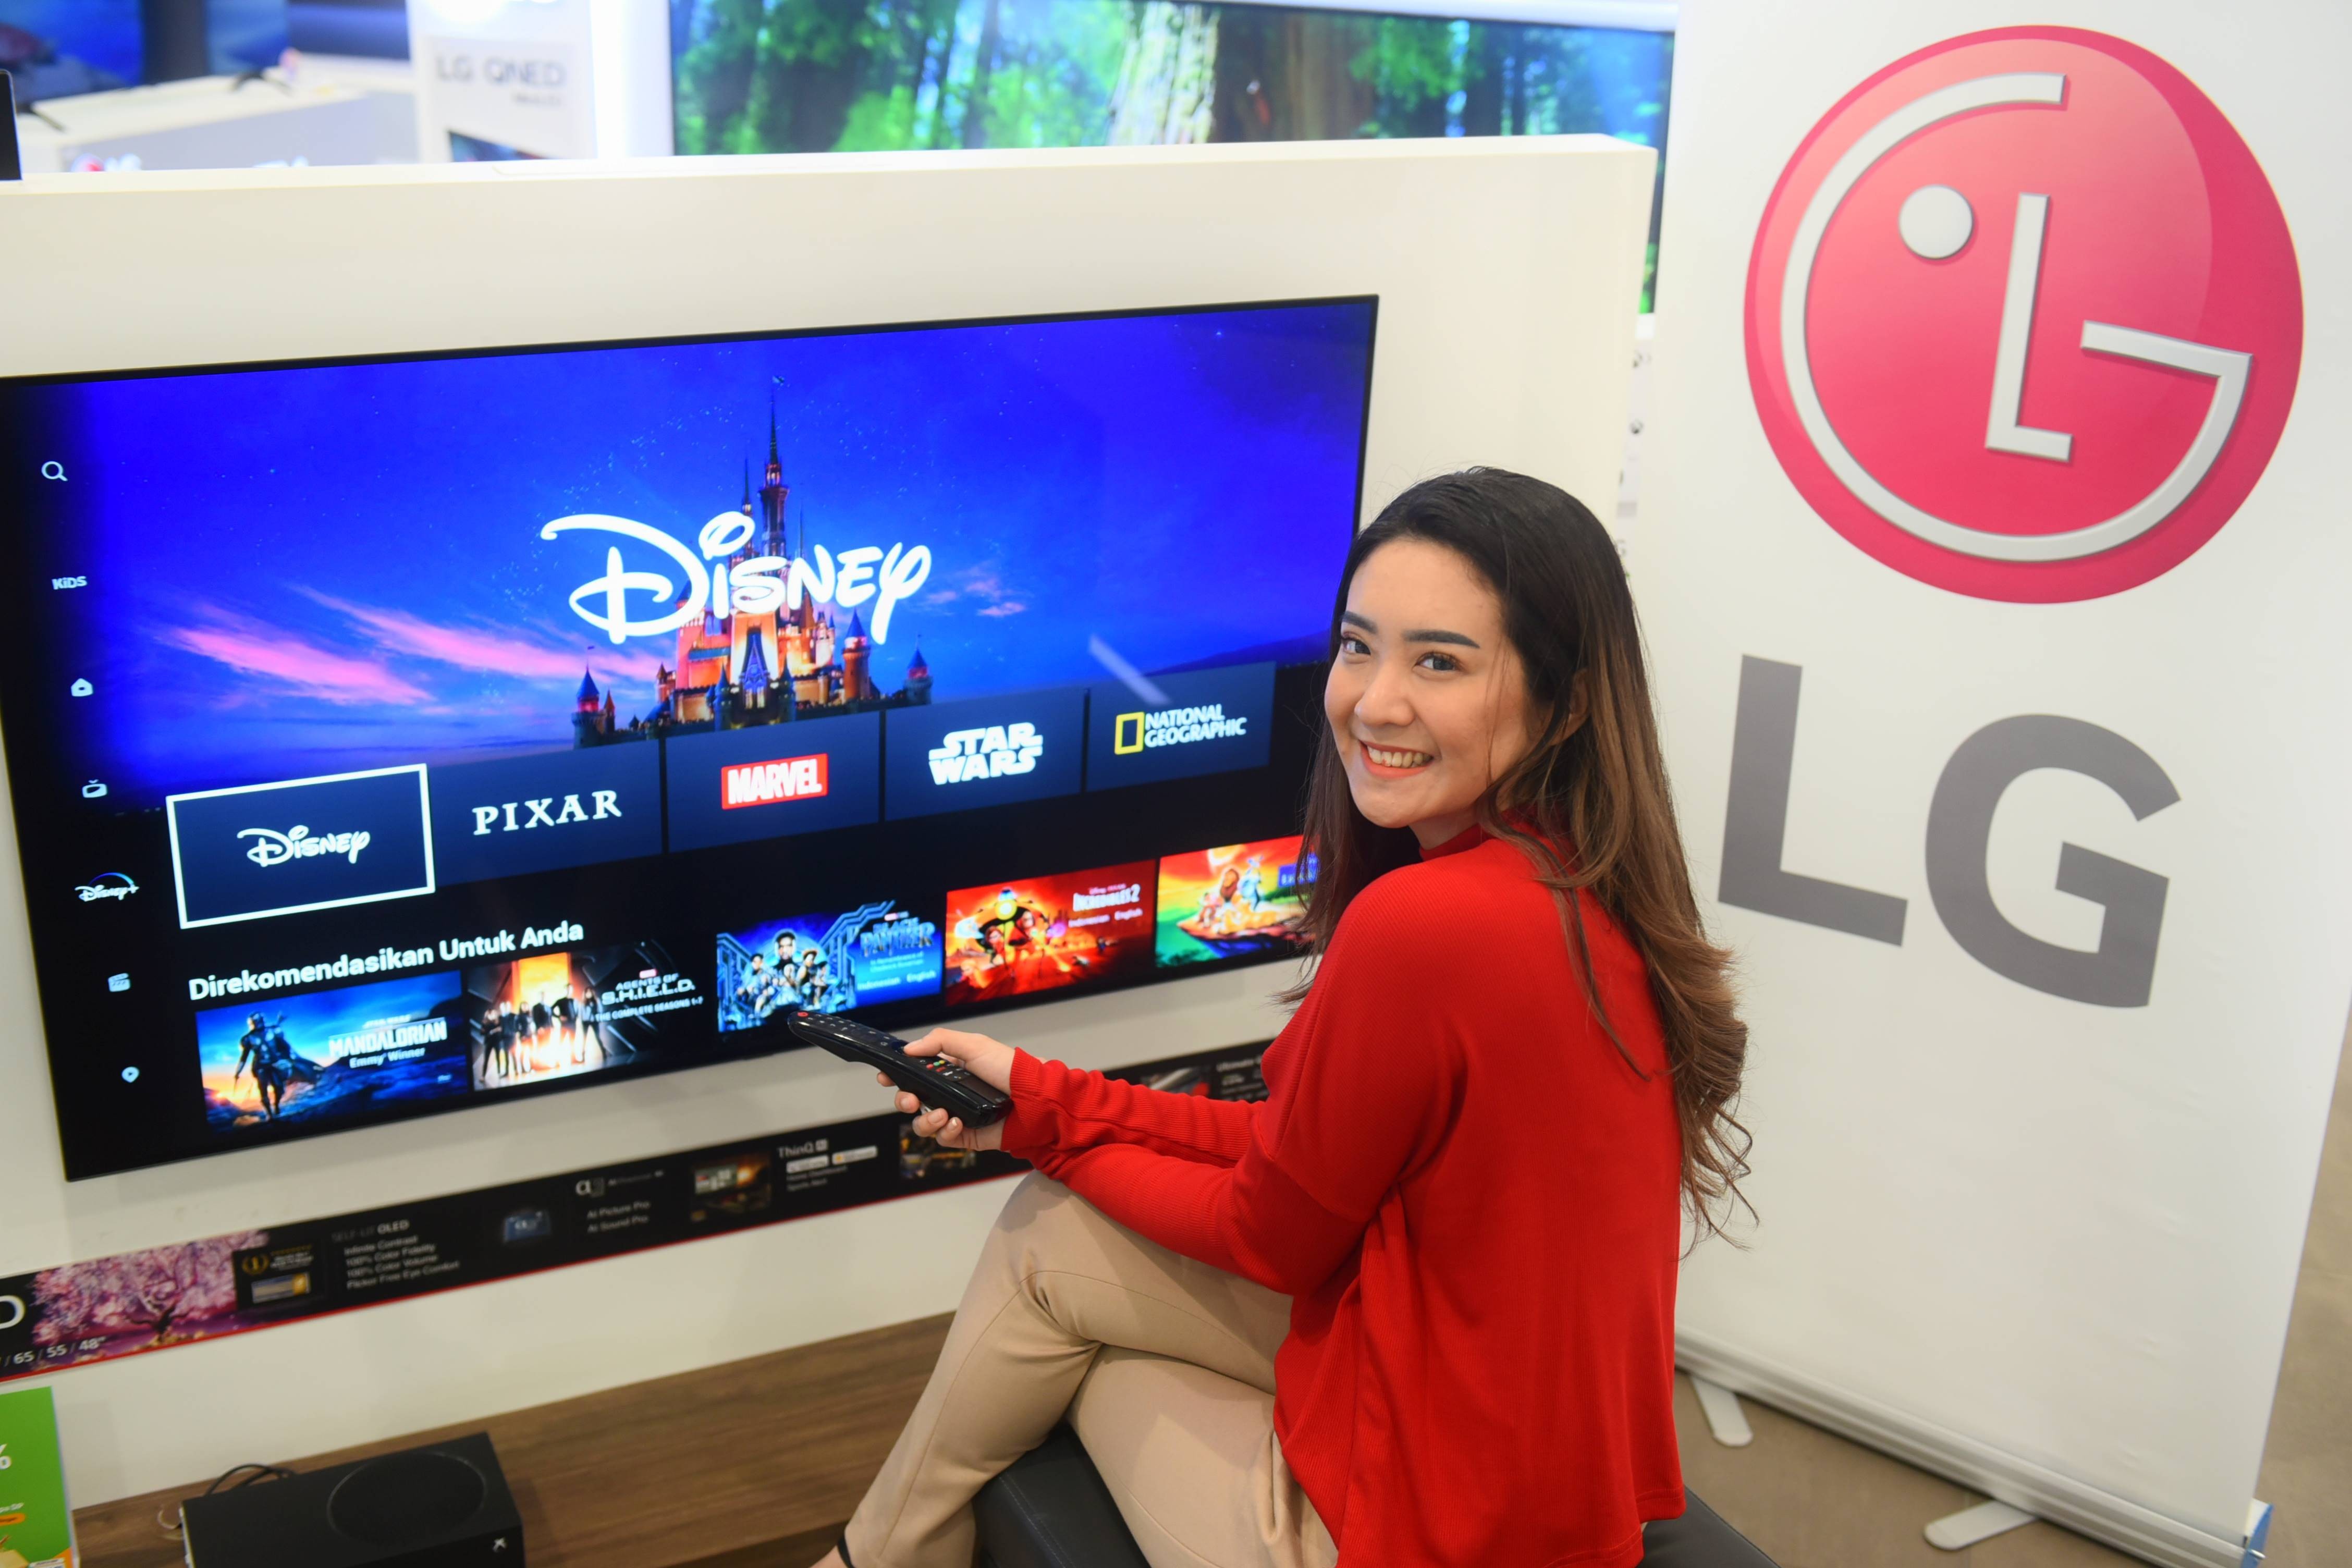 Disney+ LG Smart TV